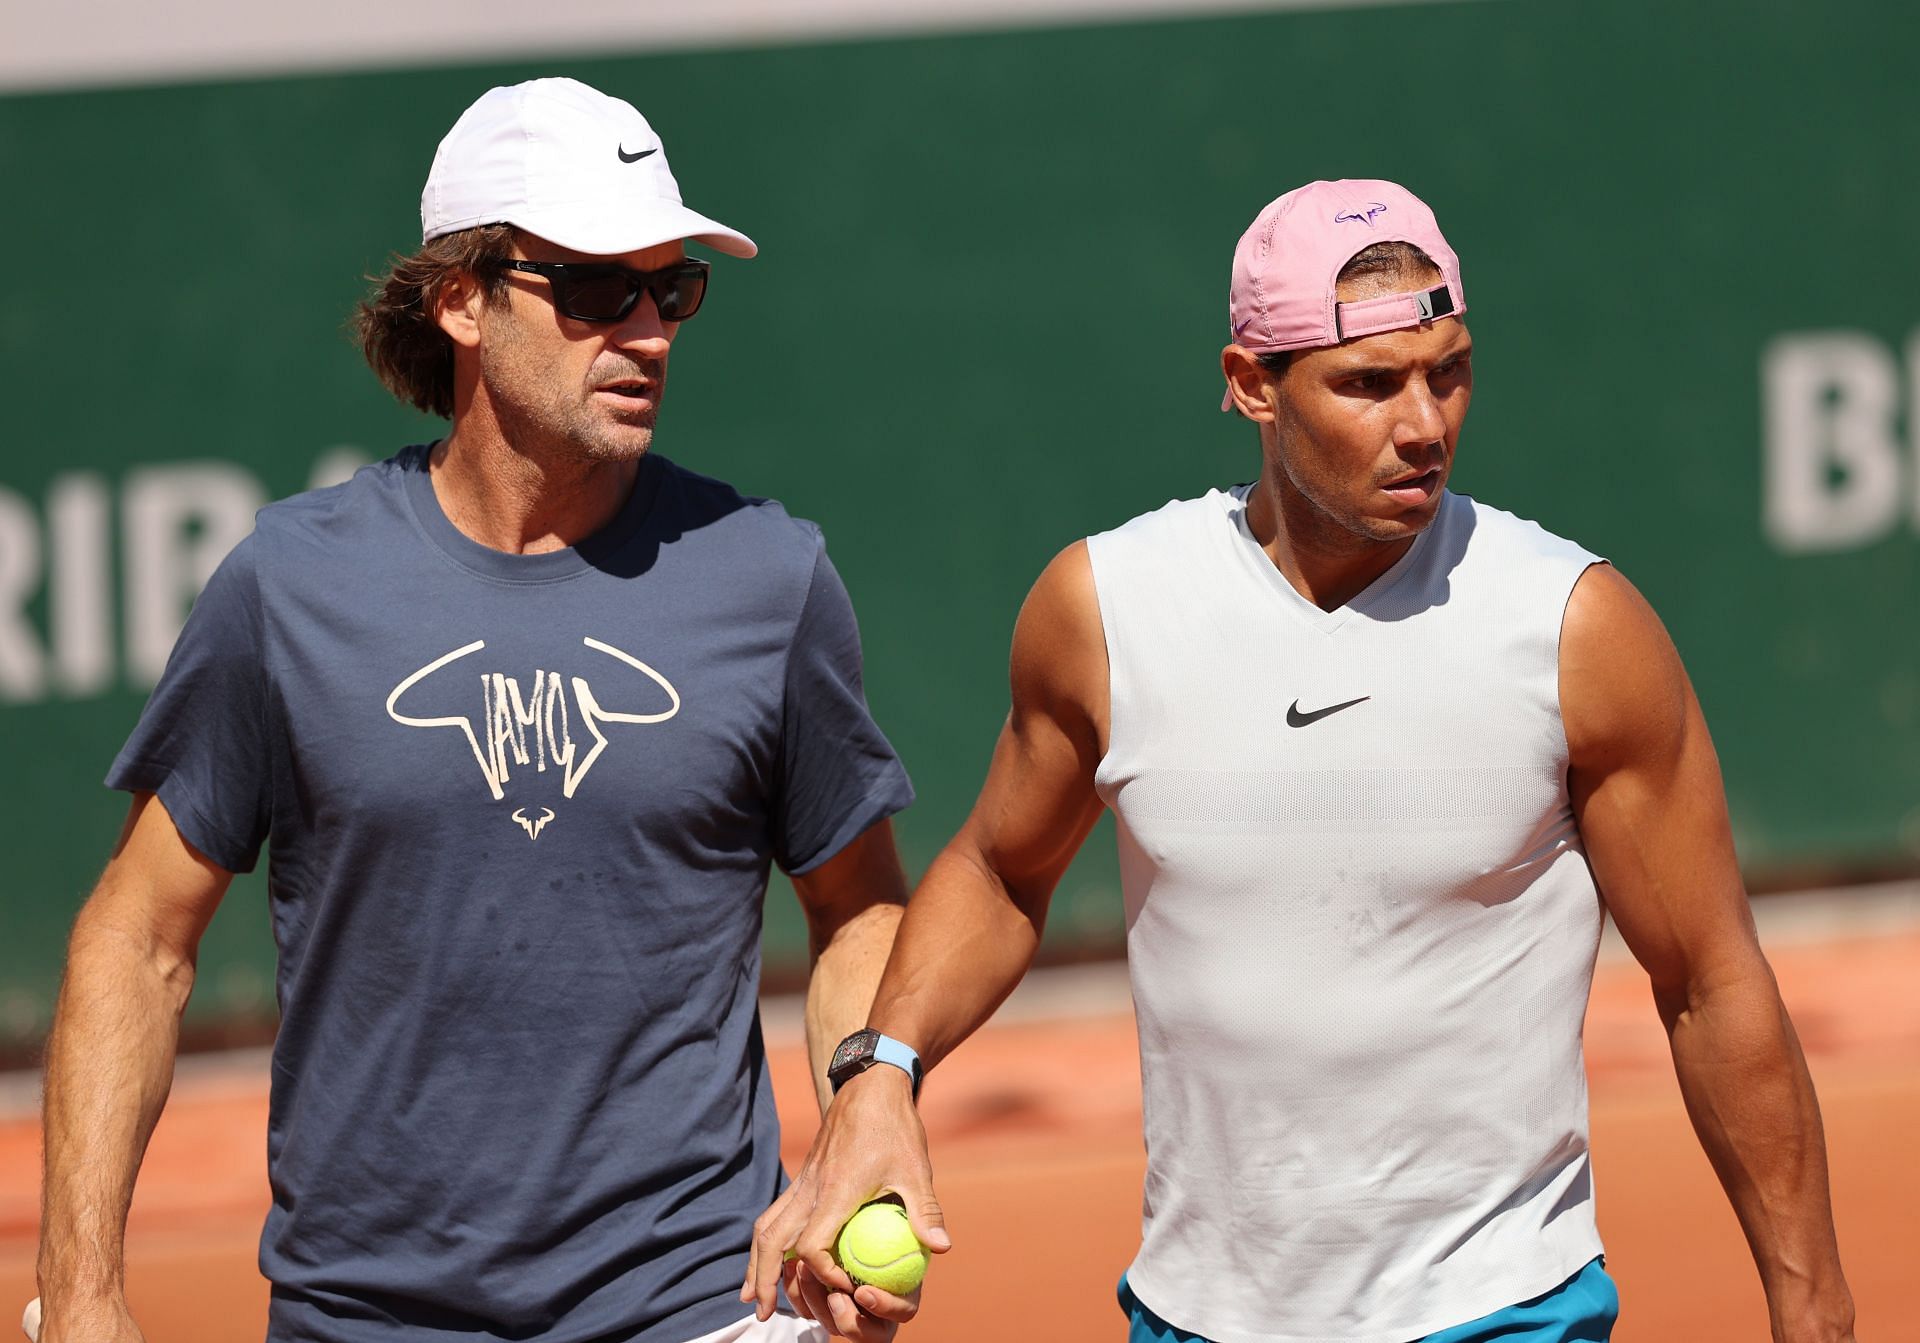 Carlos Moya and Rafael Nadal at the French Open 2021